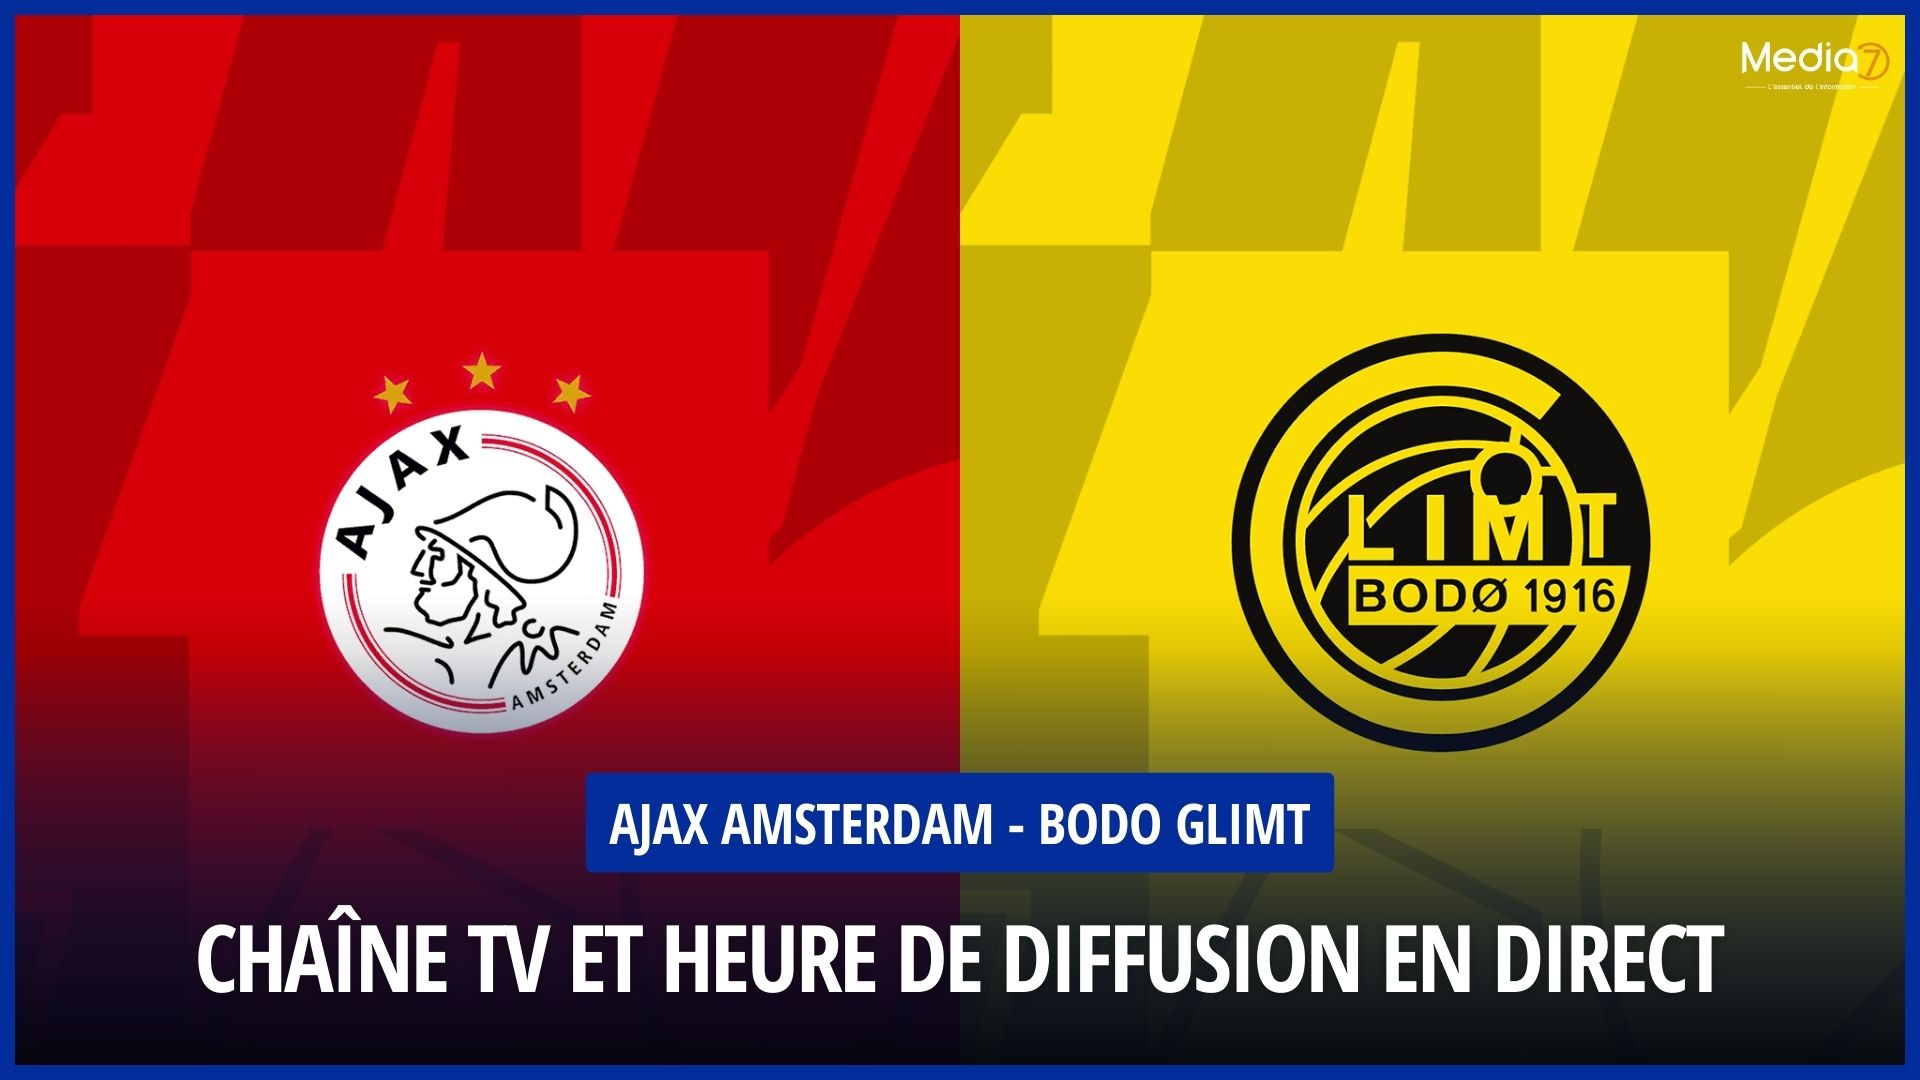 Match Ajax Amsterdam - Bodo Glimt live: TV channel and broadcast time - Media7